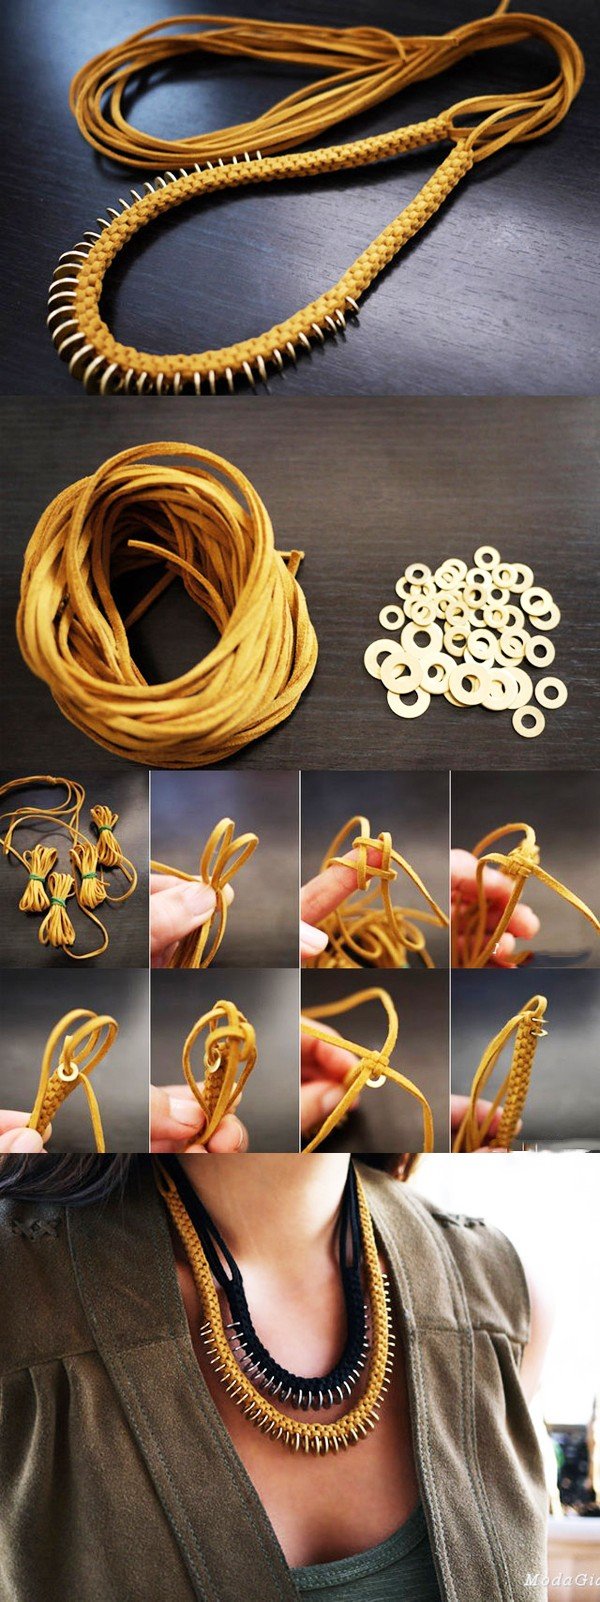 DIY Chain Necklace Tutorial